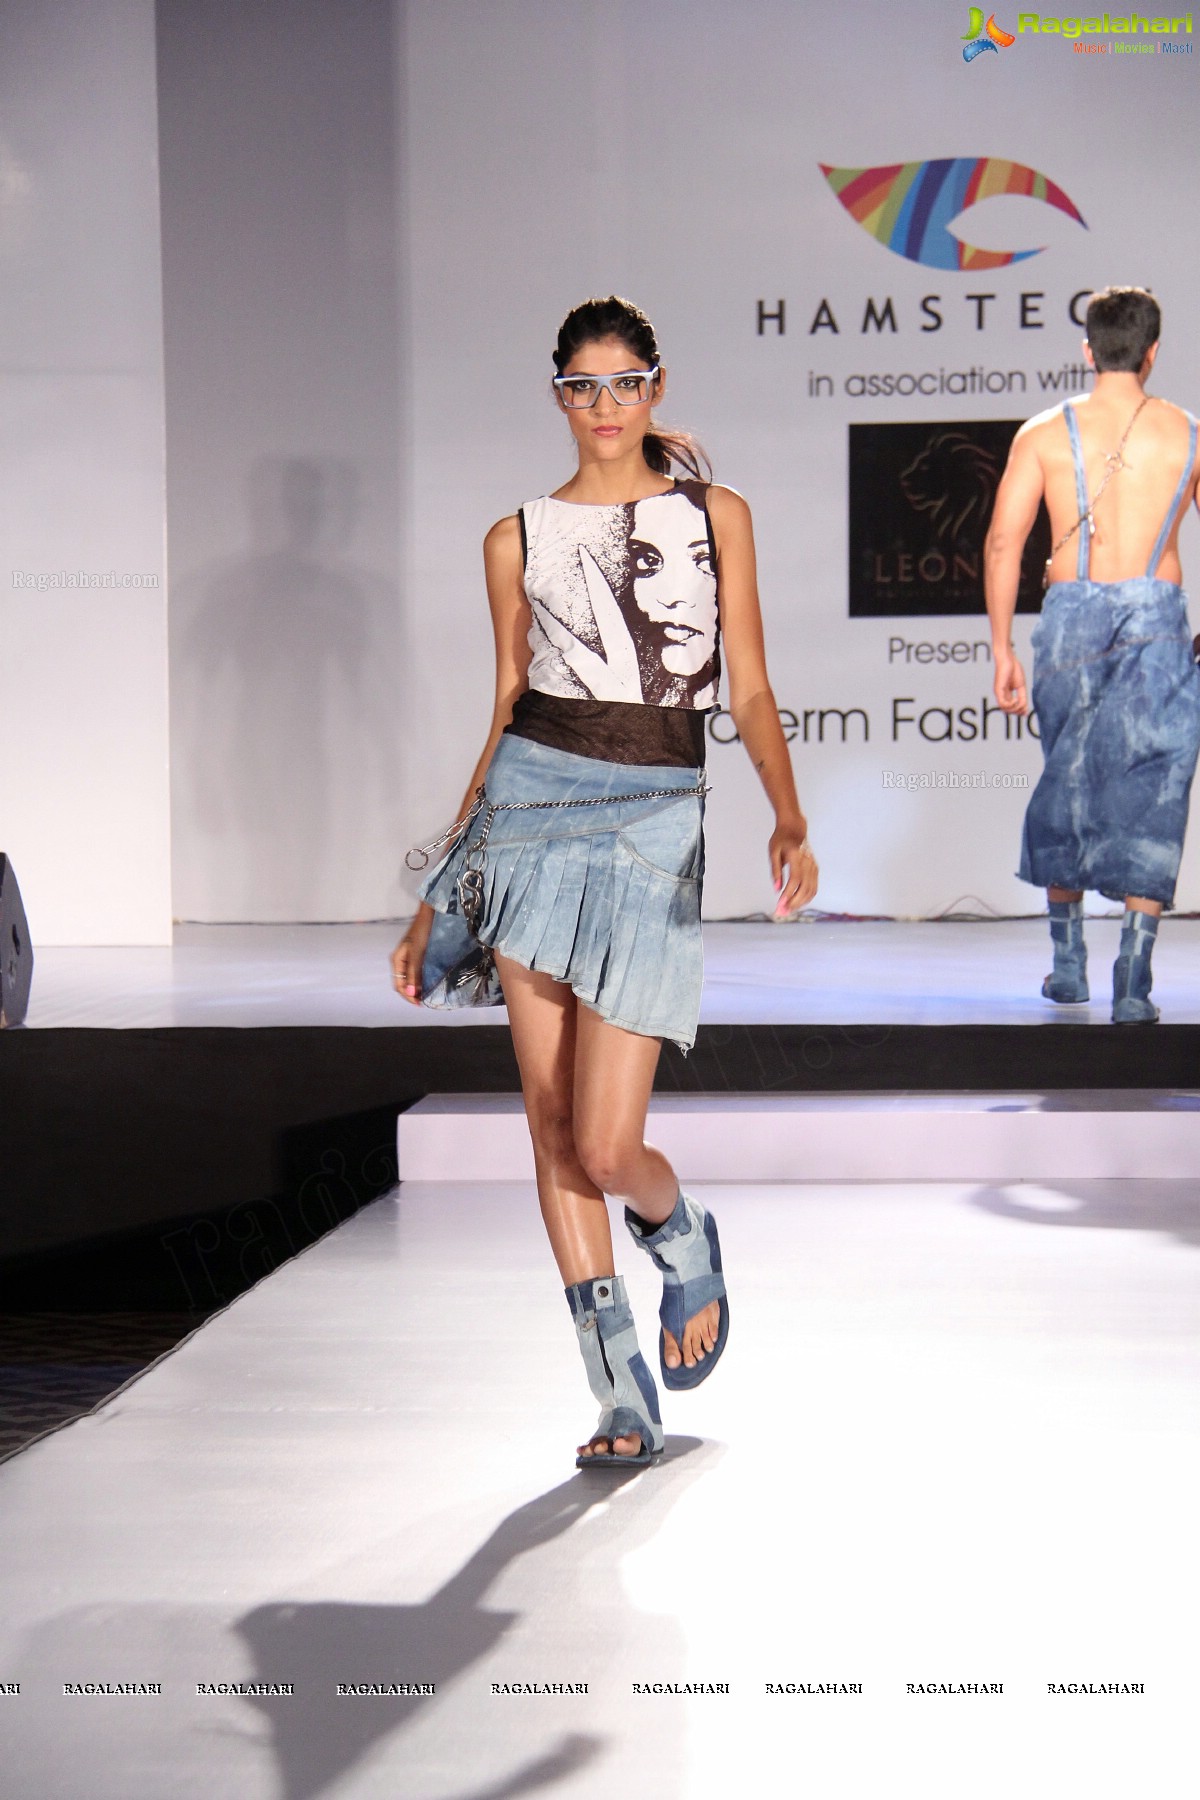 Hamstech Midterm Fashion Show 2014